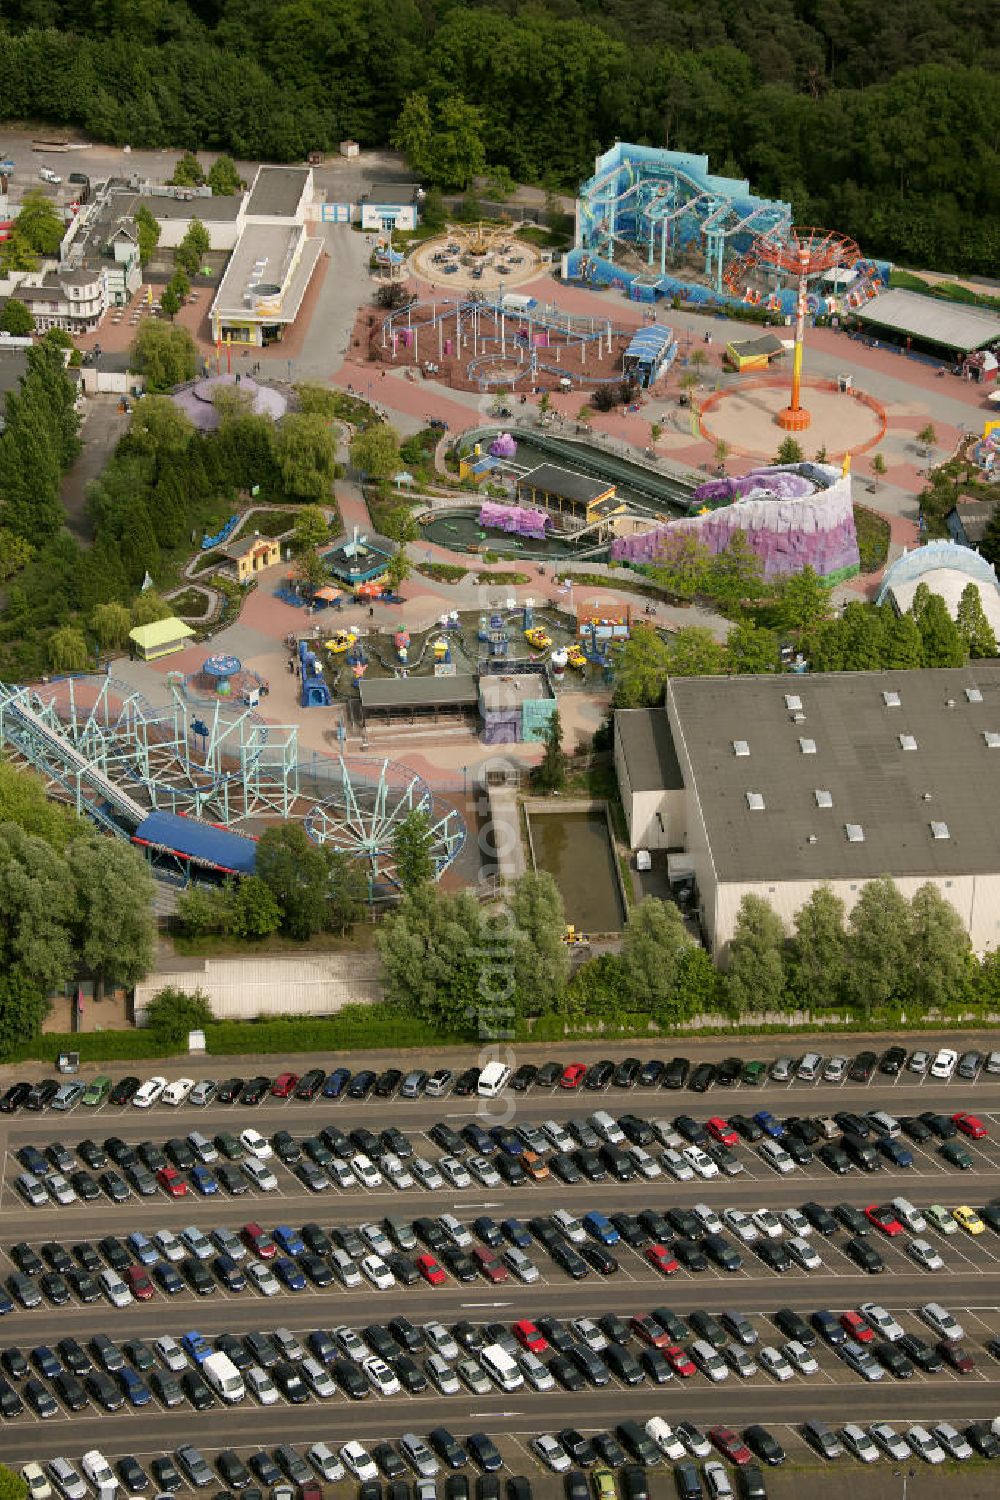 Bottrop - Kirchhellen from above - Look at the Movie Park Germany in ein Bottrop-Kirchellen. The theme park focuses on films